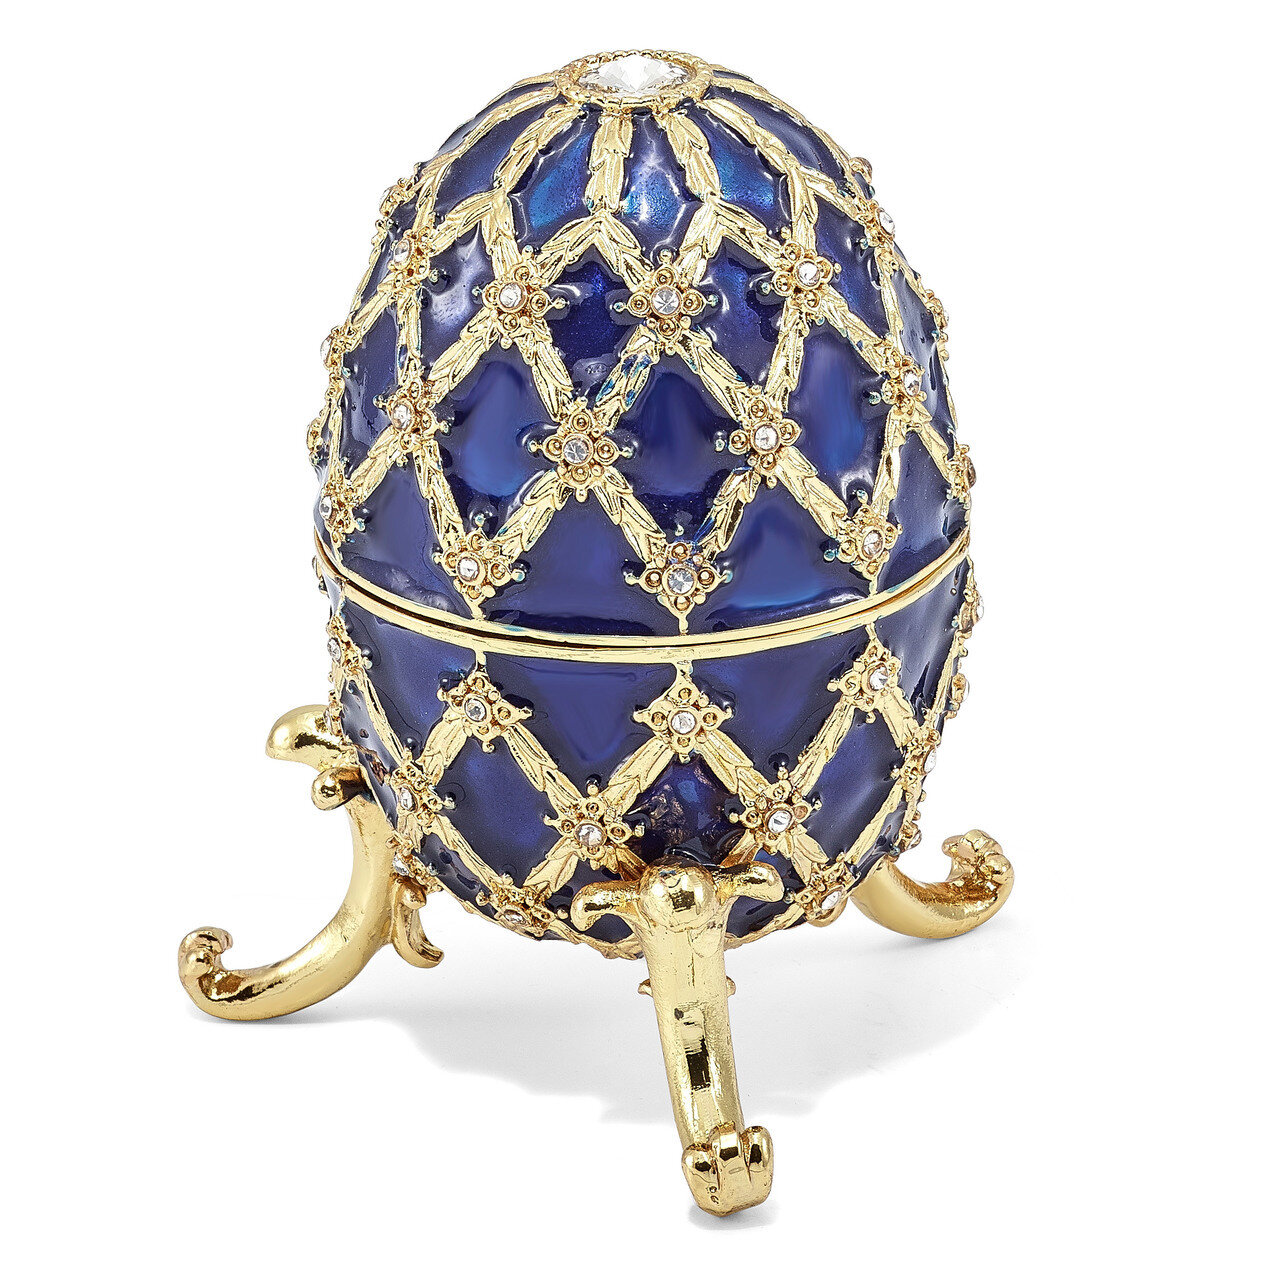 Grand Royal Blue Musical Egg Enamel on Pewter by Jere